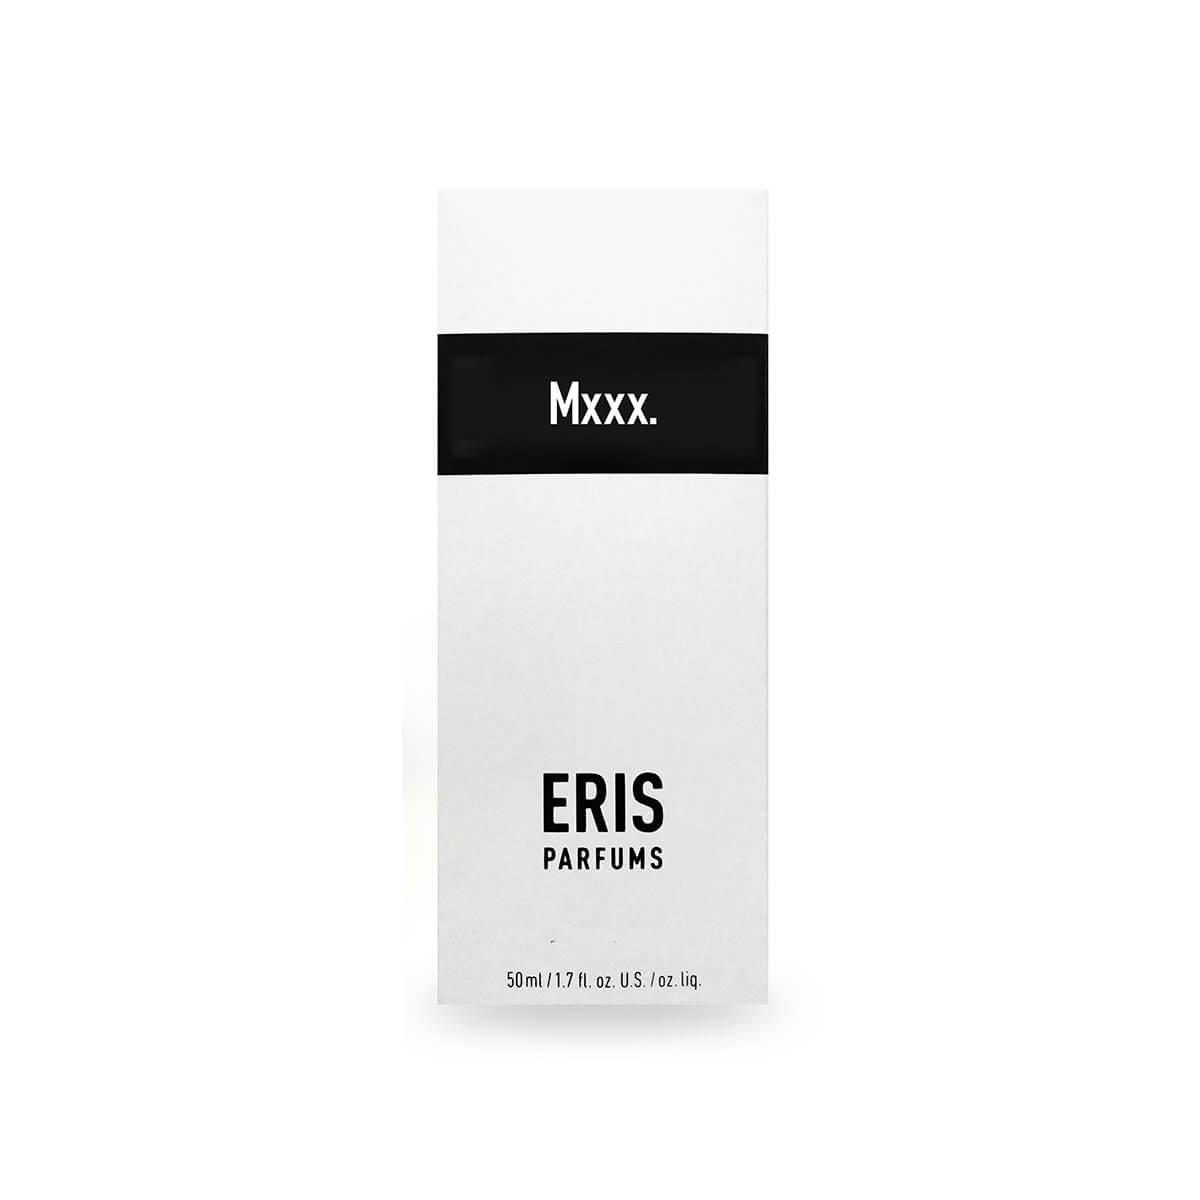 Mxxx. by Eris Parfums at Indigo